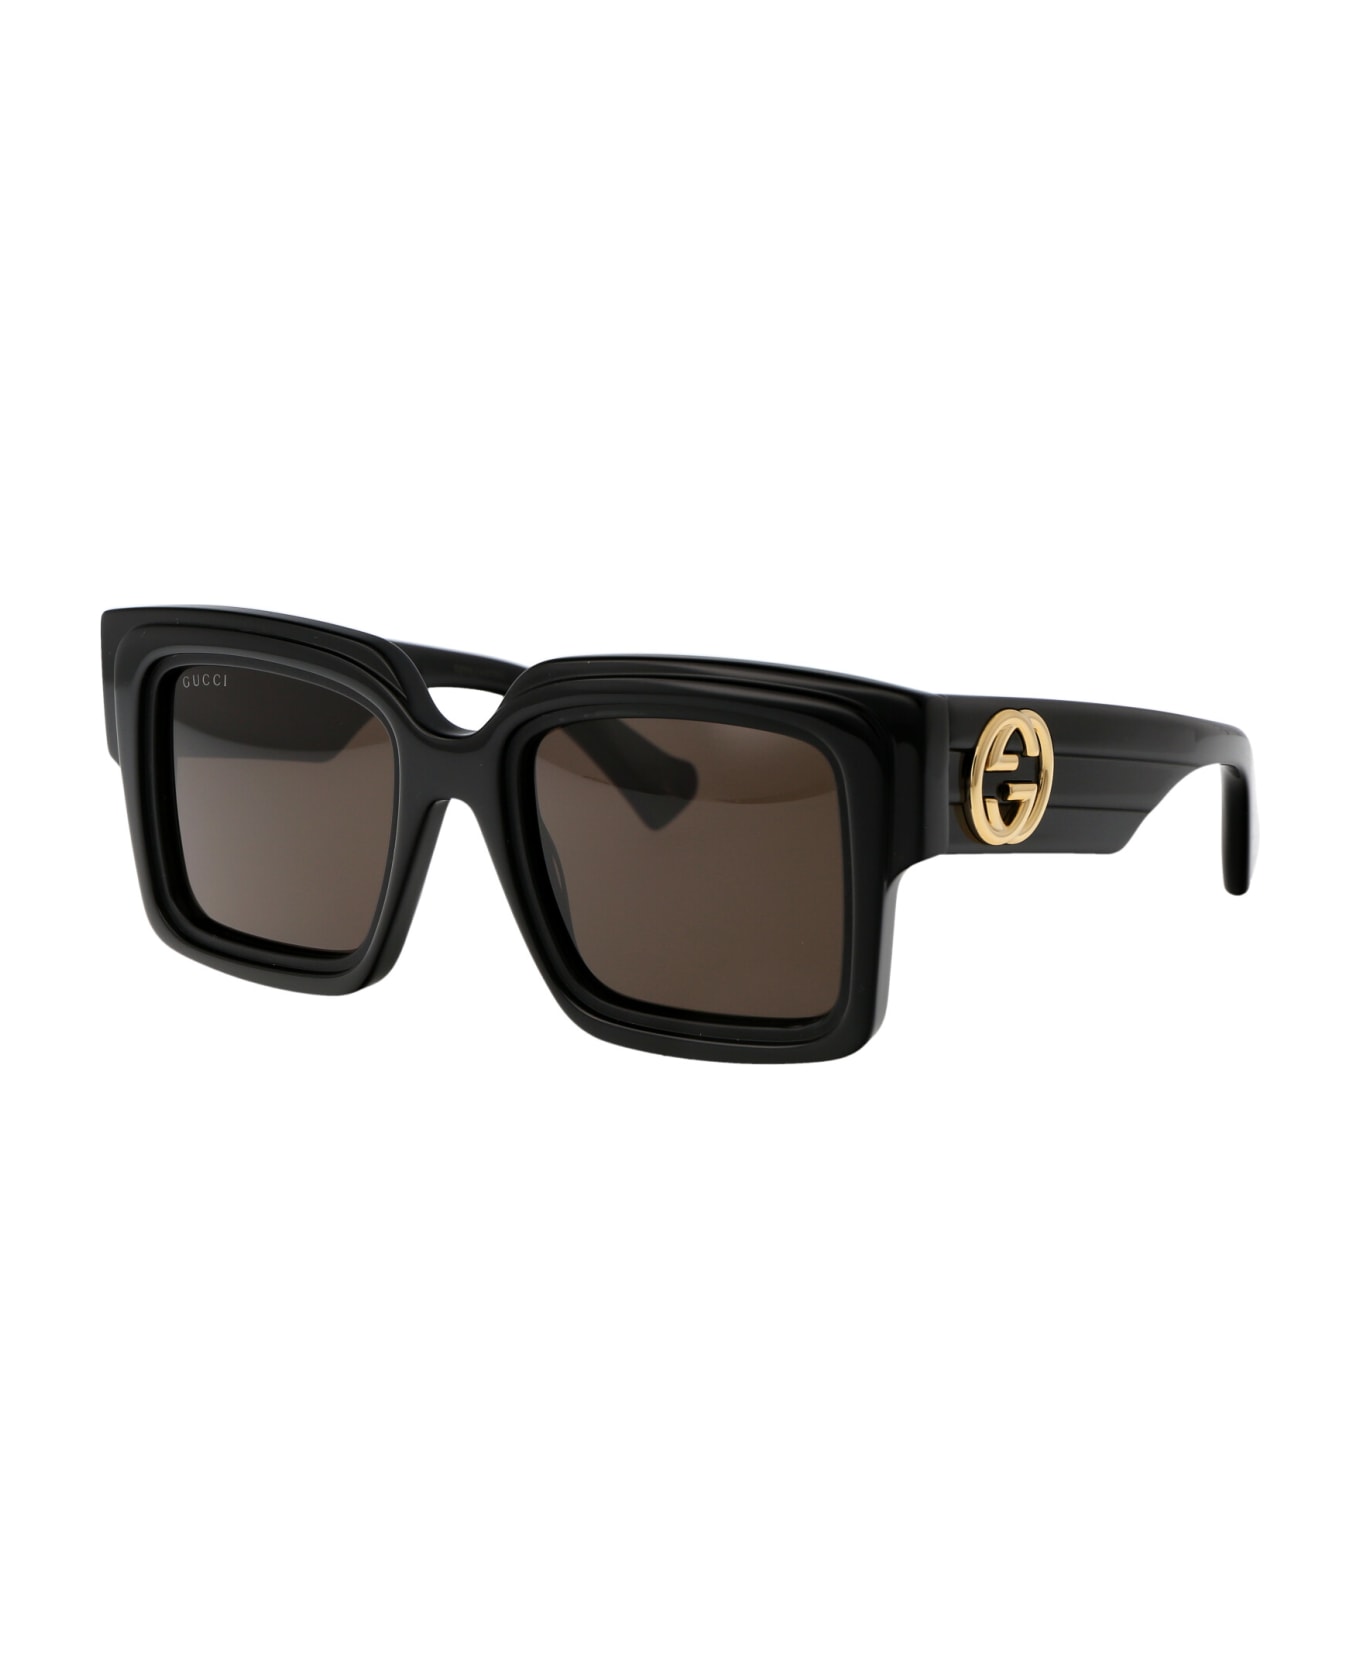 Gucci Eyewear Gg1307s Sunglasses - 001 BLACK BLACK BROWN